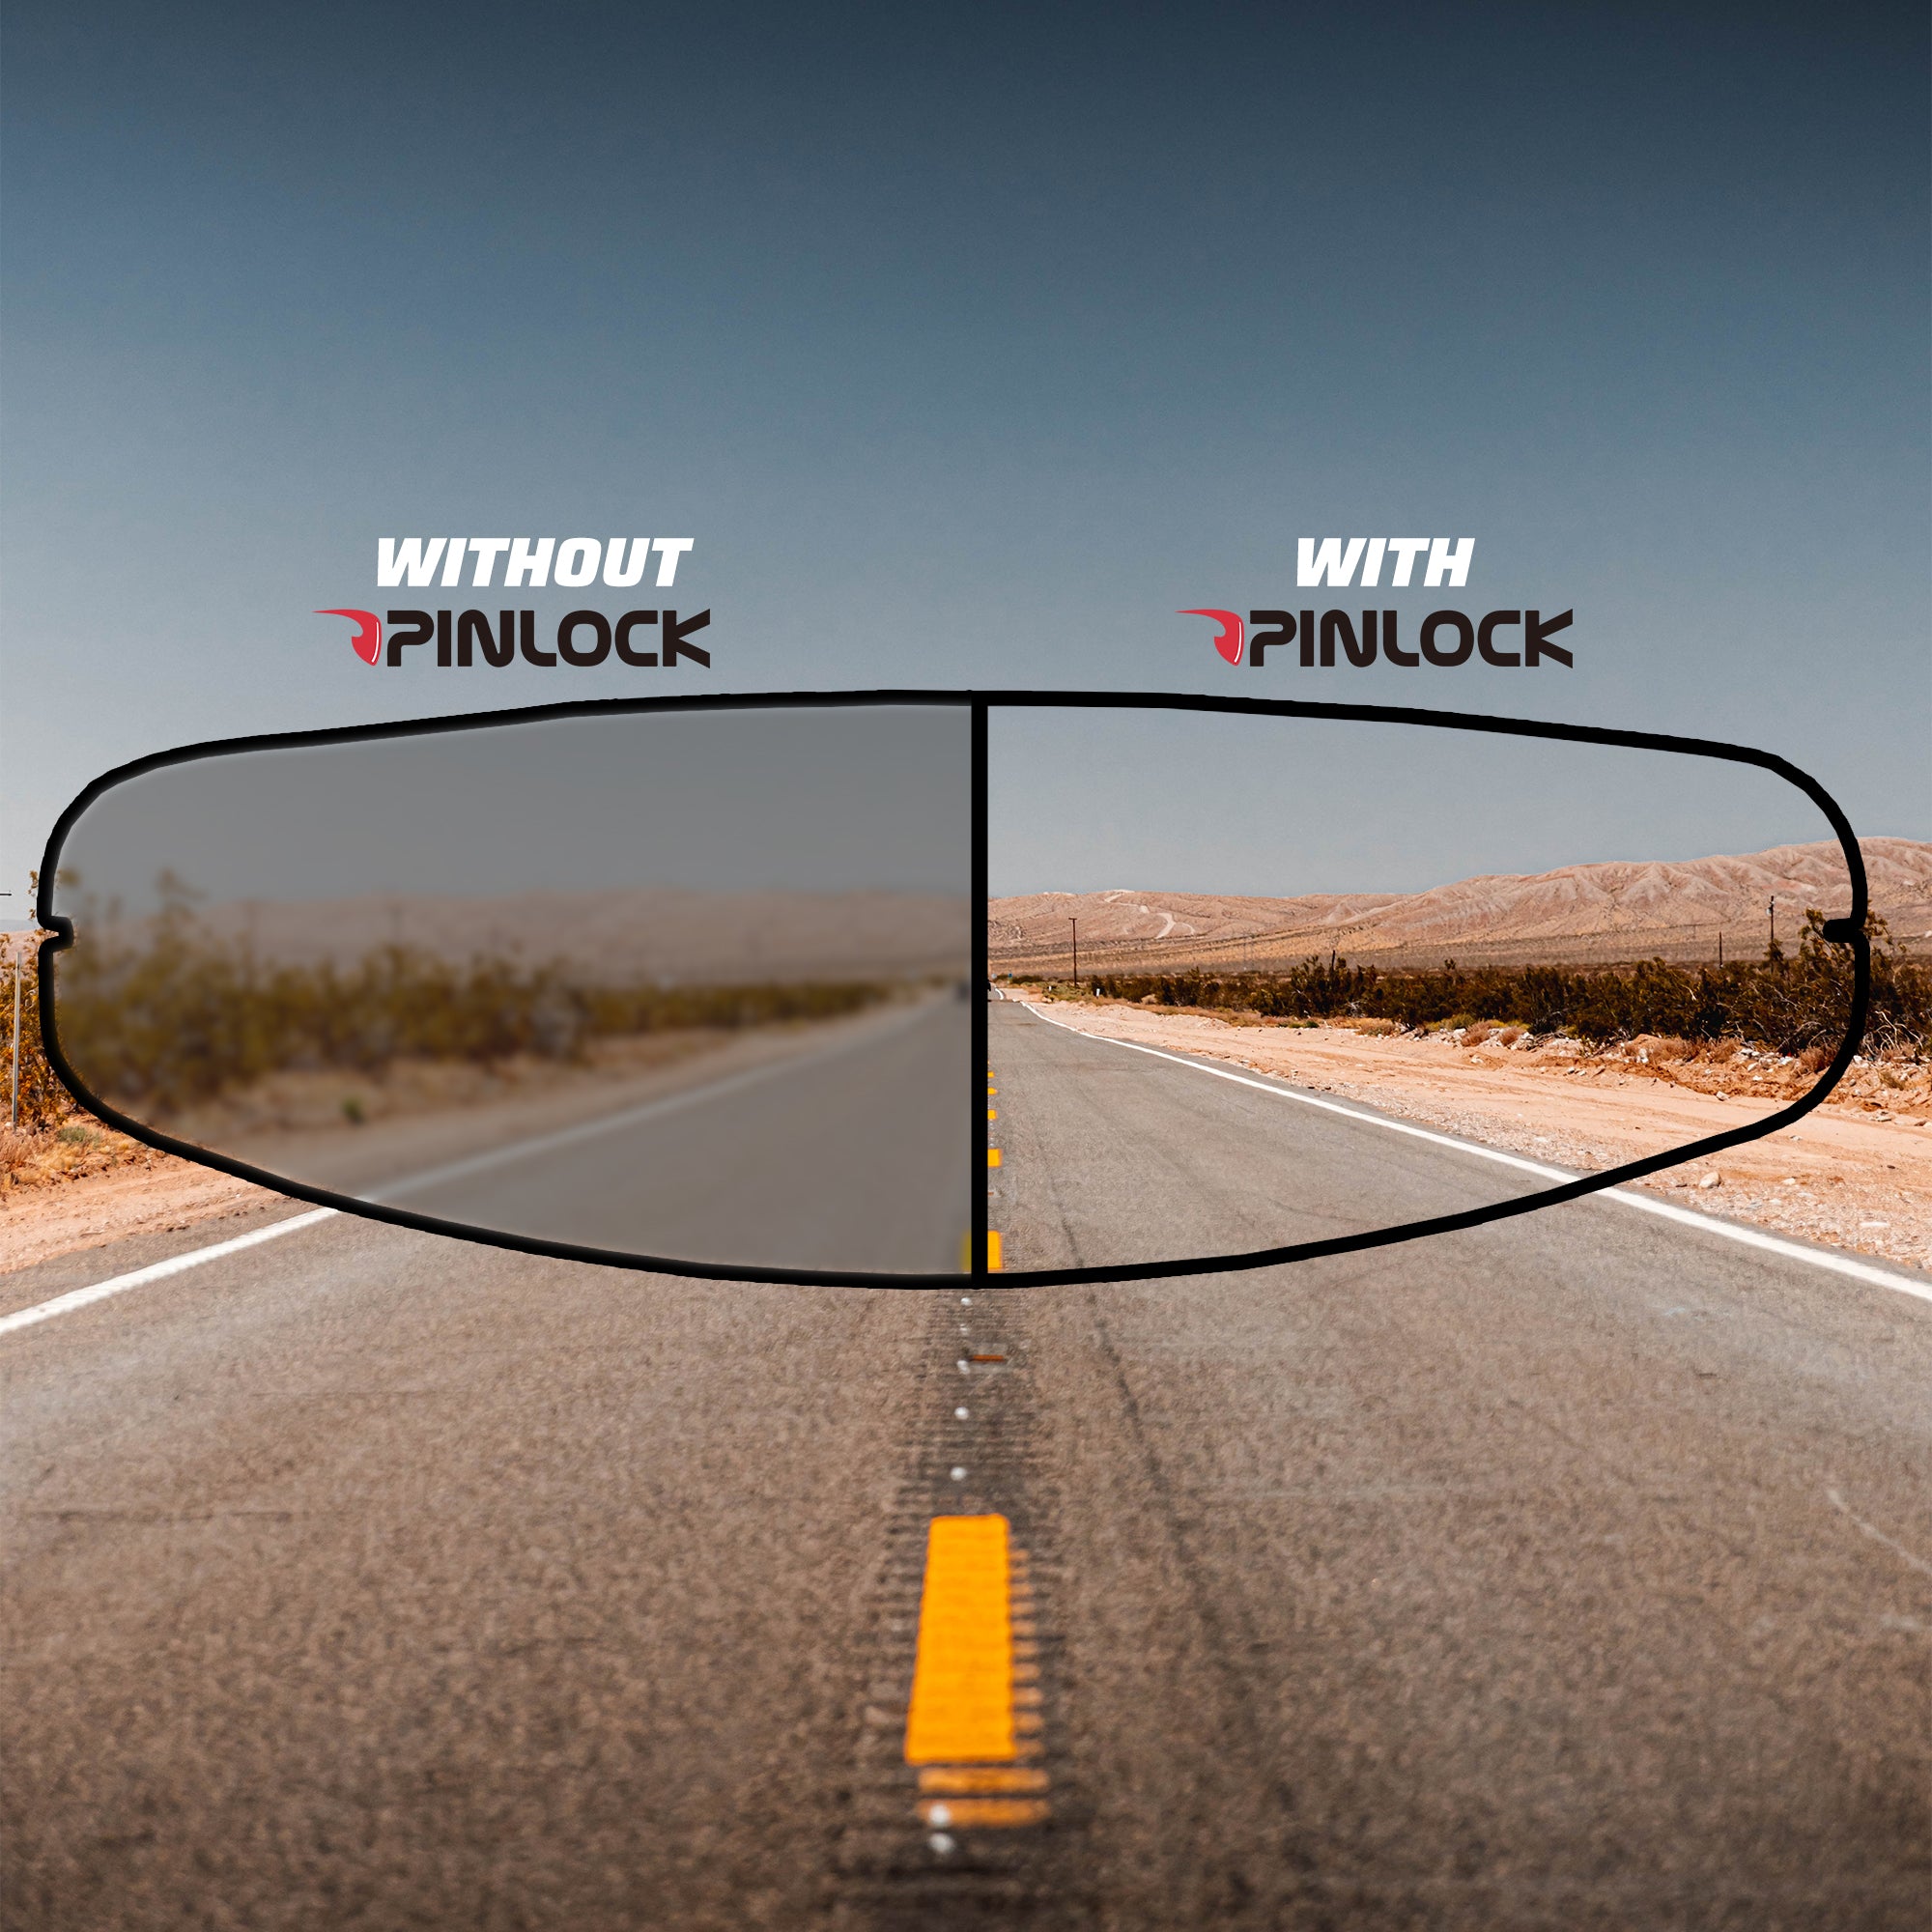 HAX Pinlock Lens for Motorcycle Helmet Visor of Impulse Series